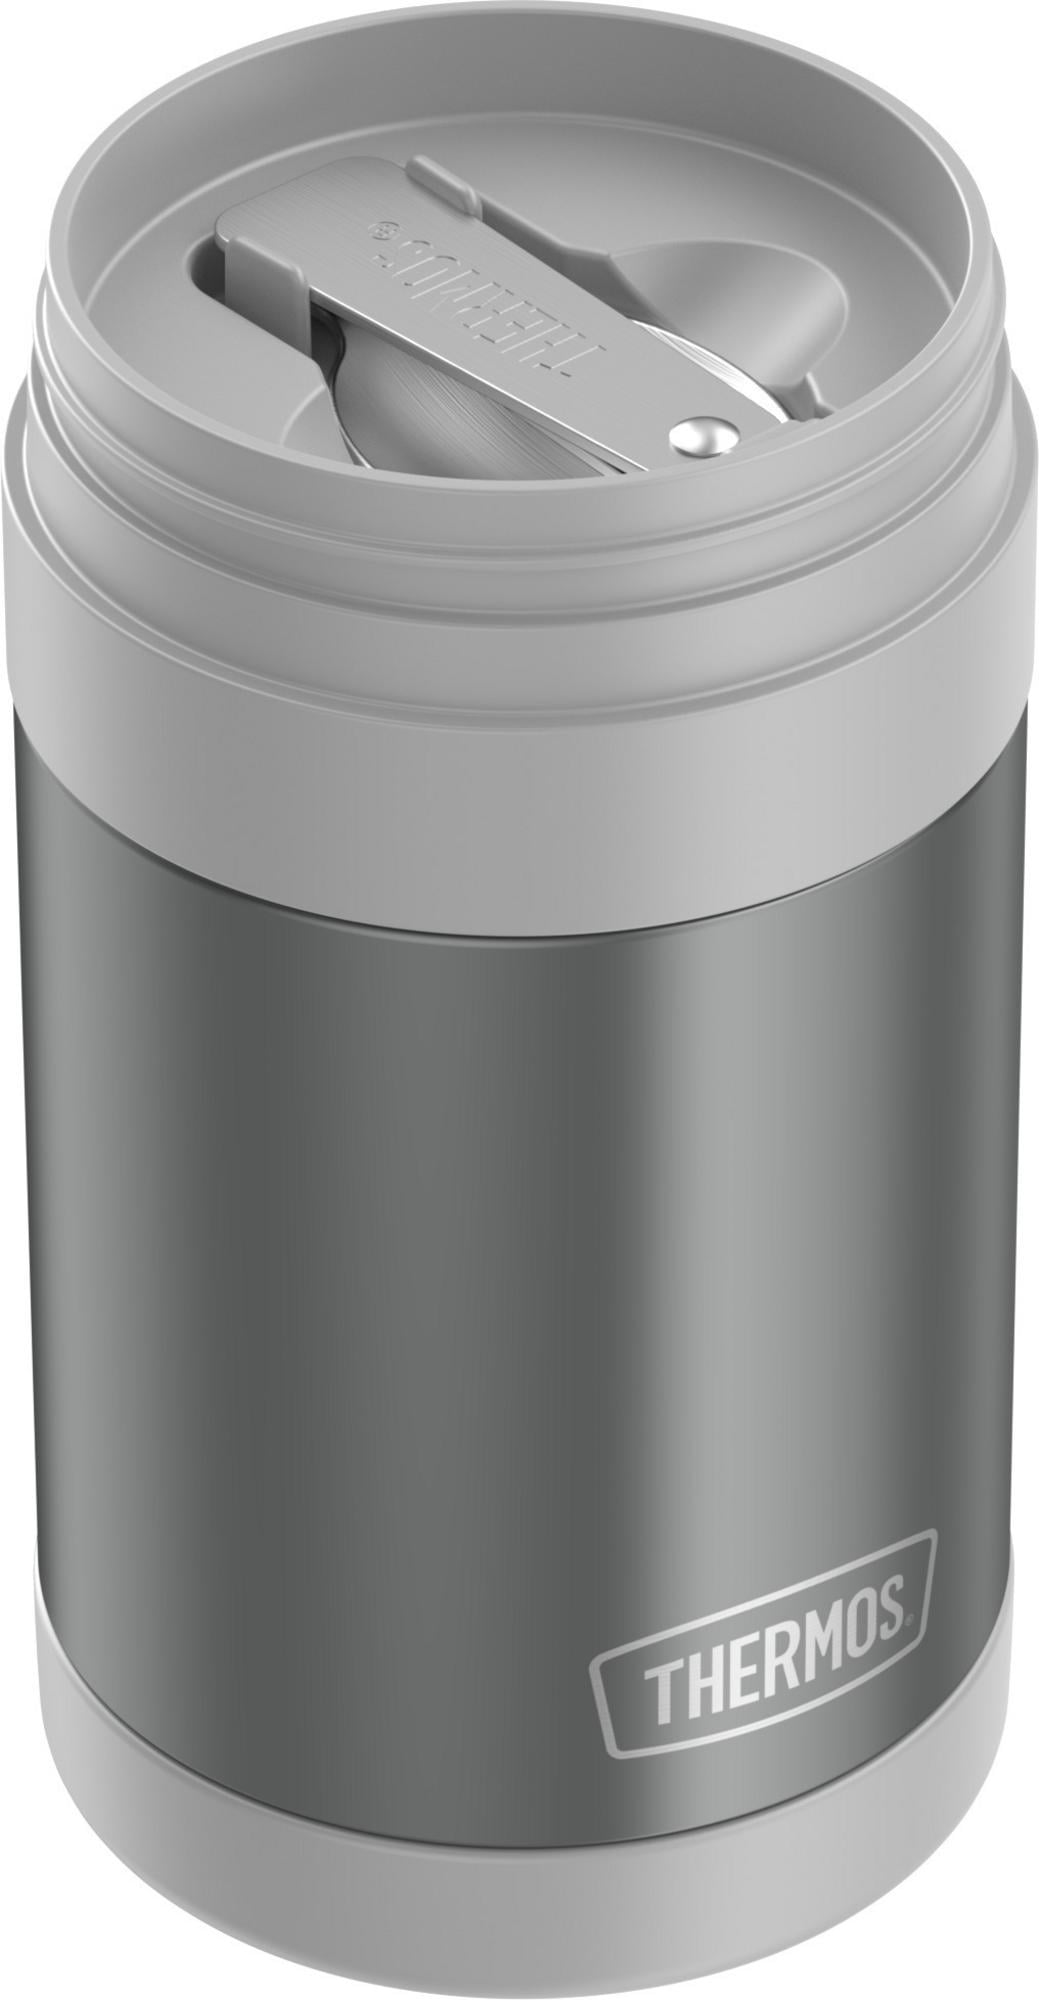 FUNtainer® Insulated Food Jar, Stainless Steel Food Jar